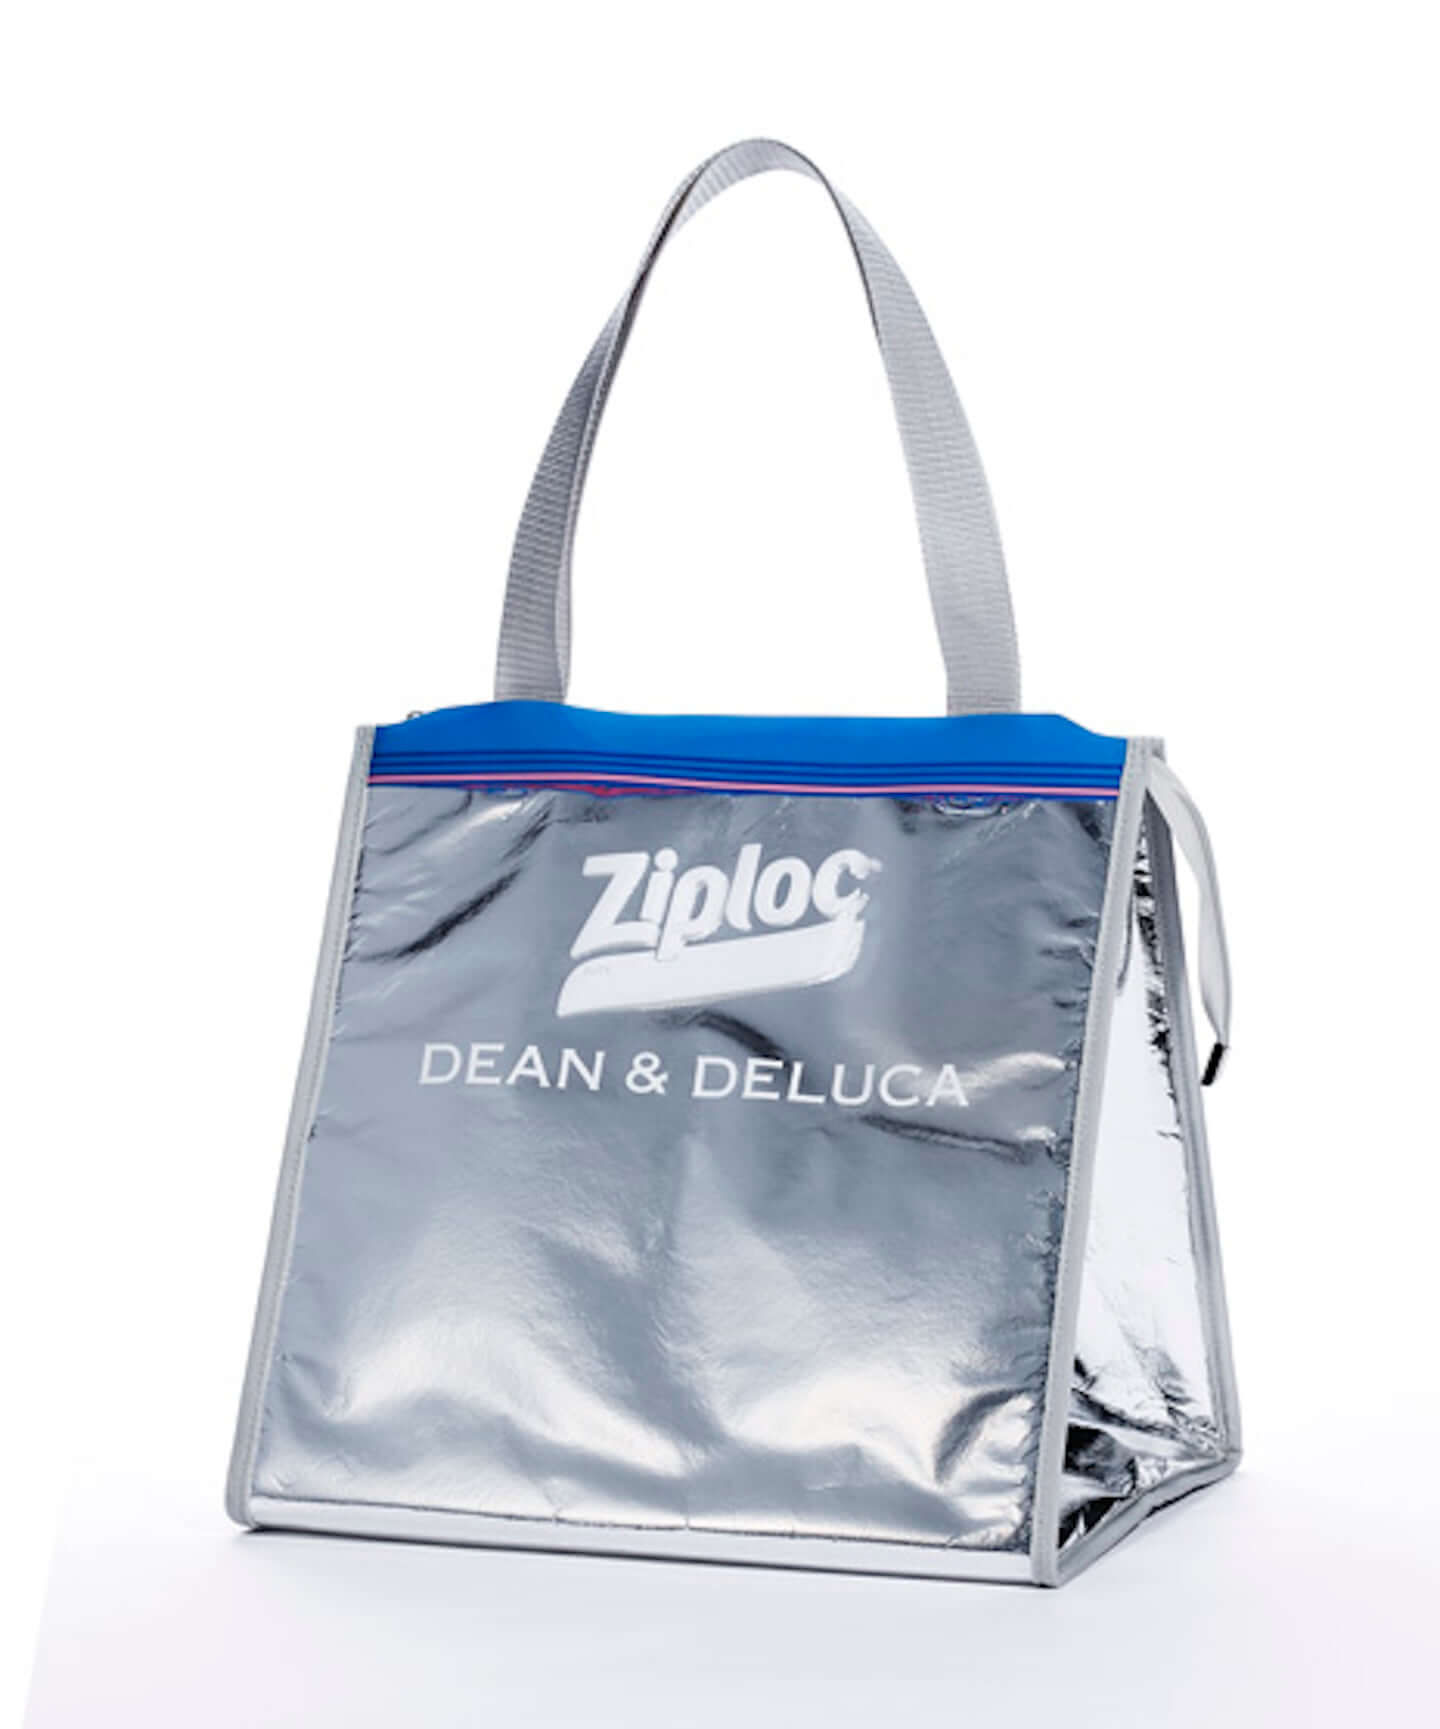 DEAN ＆ DELUCAとBEAMS COUTURE、Ziplocのコラボクーラーバッグが再度登場！3サイズ展開で発売決定 | Qetic